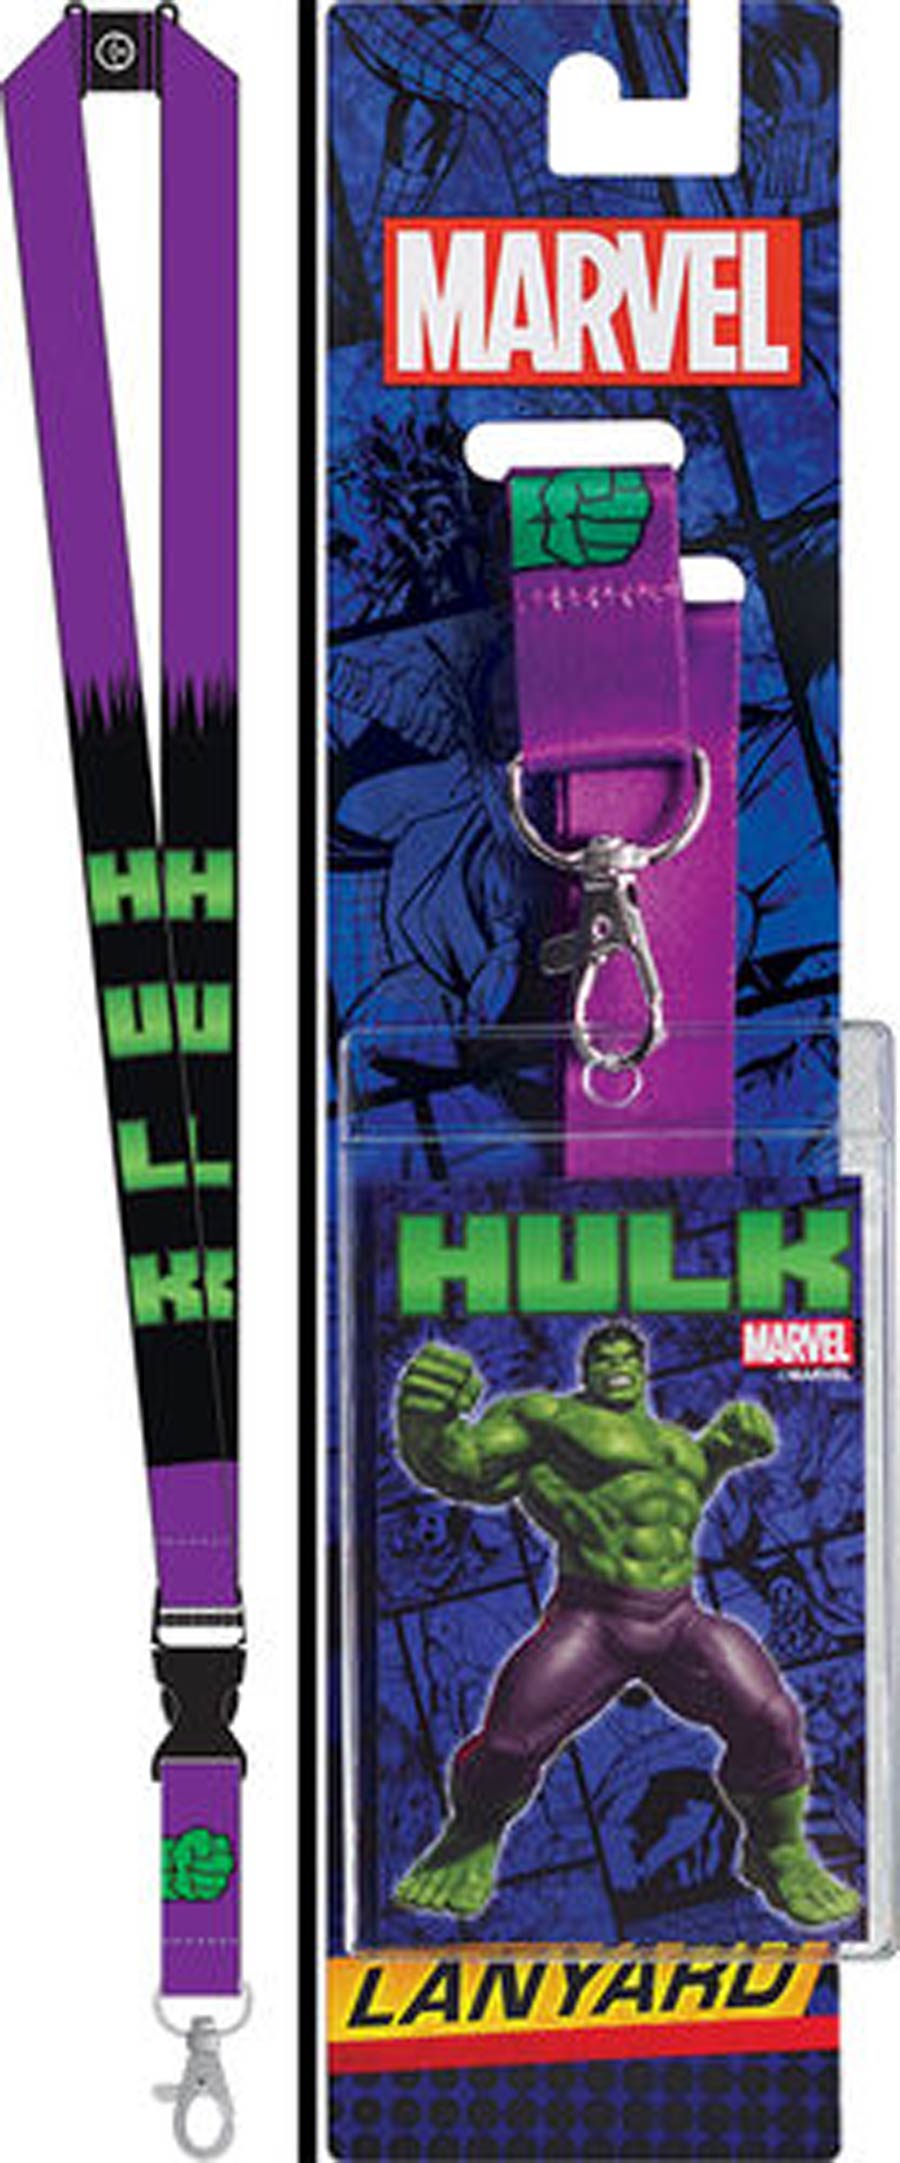 Marvel Lanyard - Hulk (17026MV)